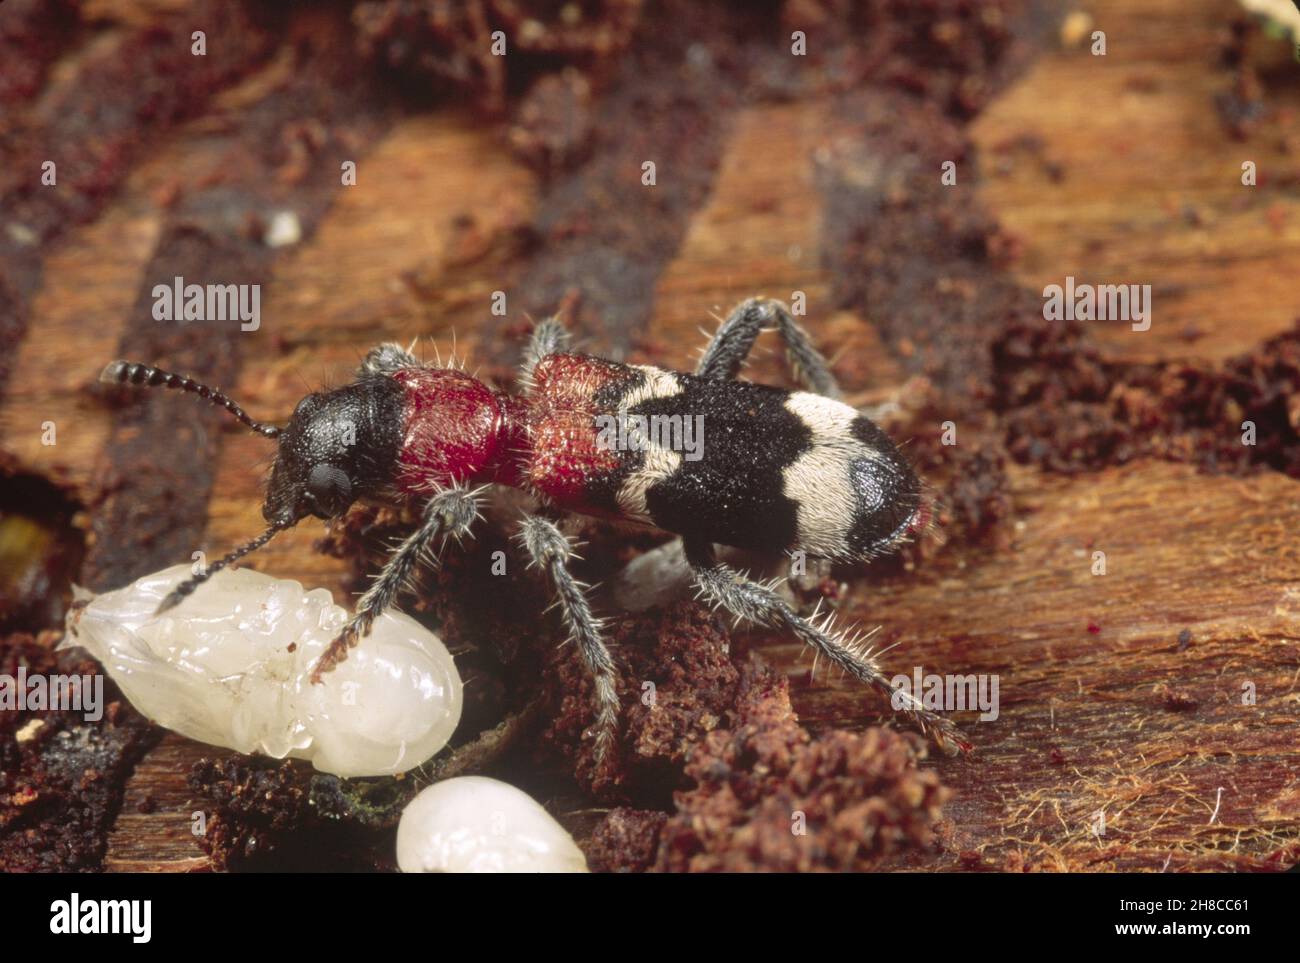 Ant beetle, European Red-bellied Clerid (Thanasimus formicarius), with larva of bark beetle, Germany Stock Photo